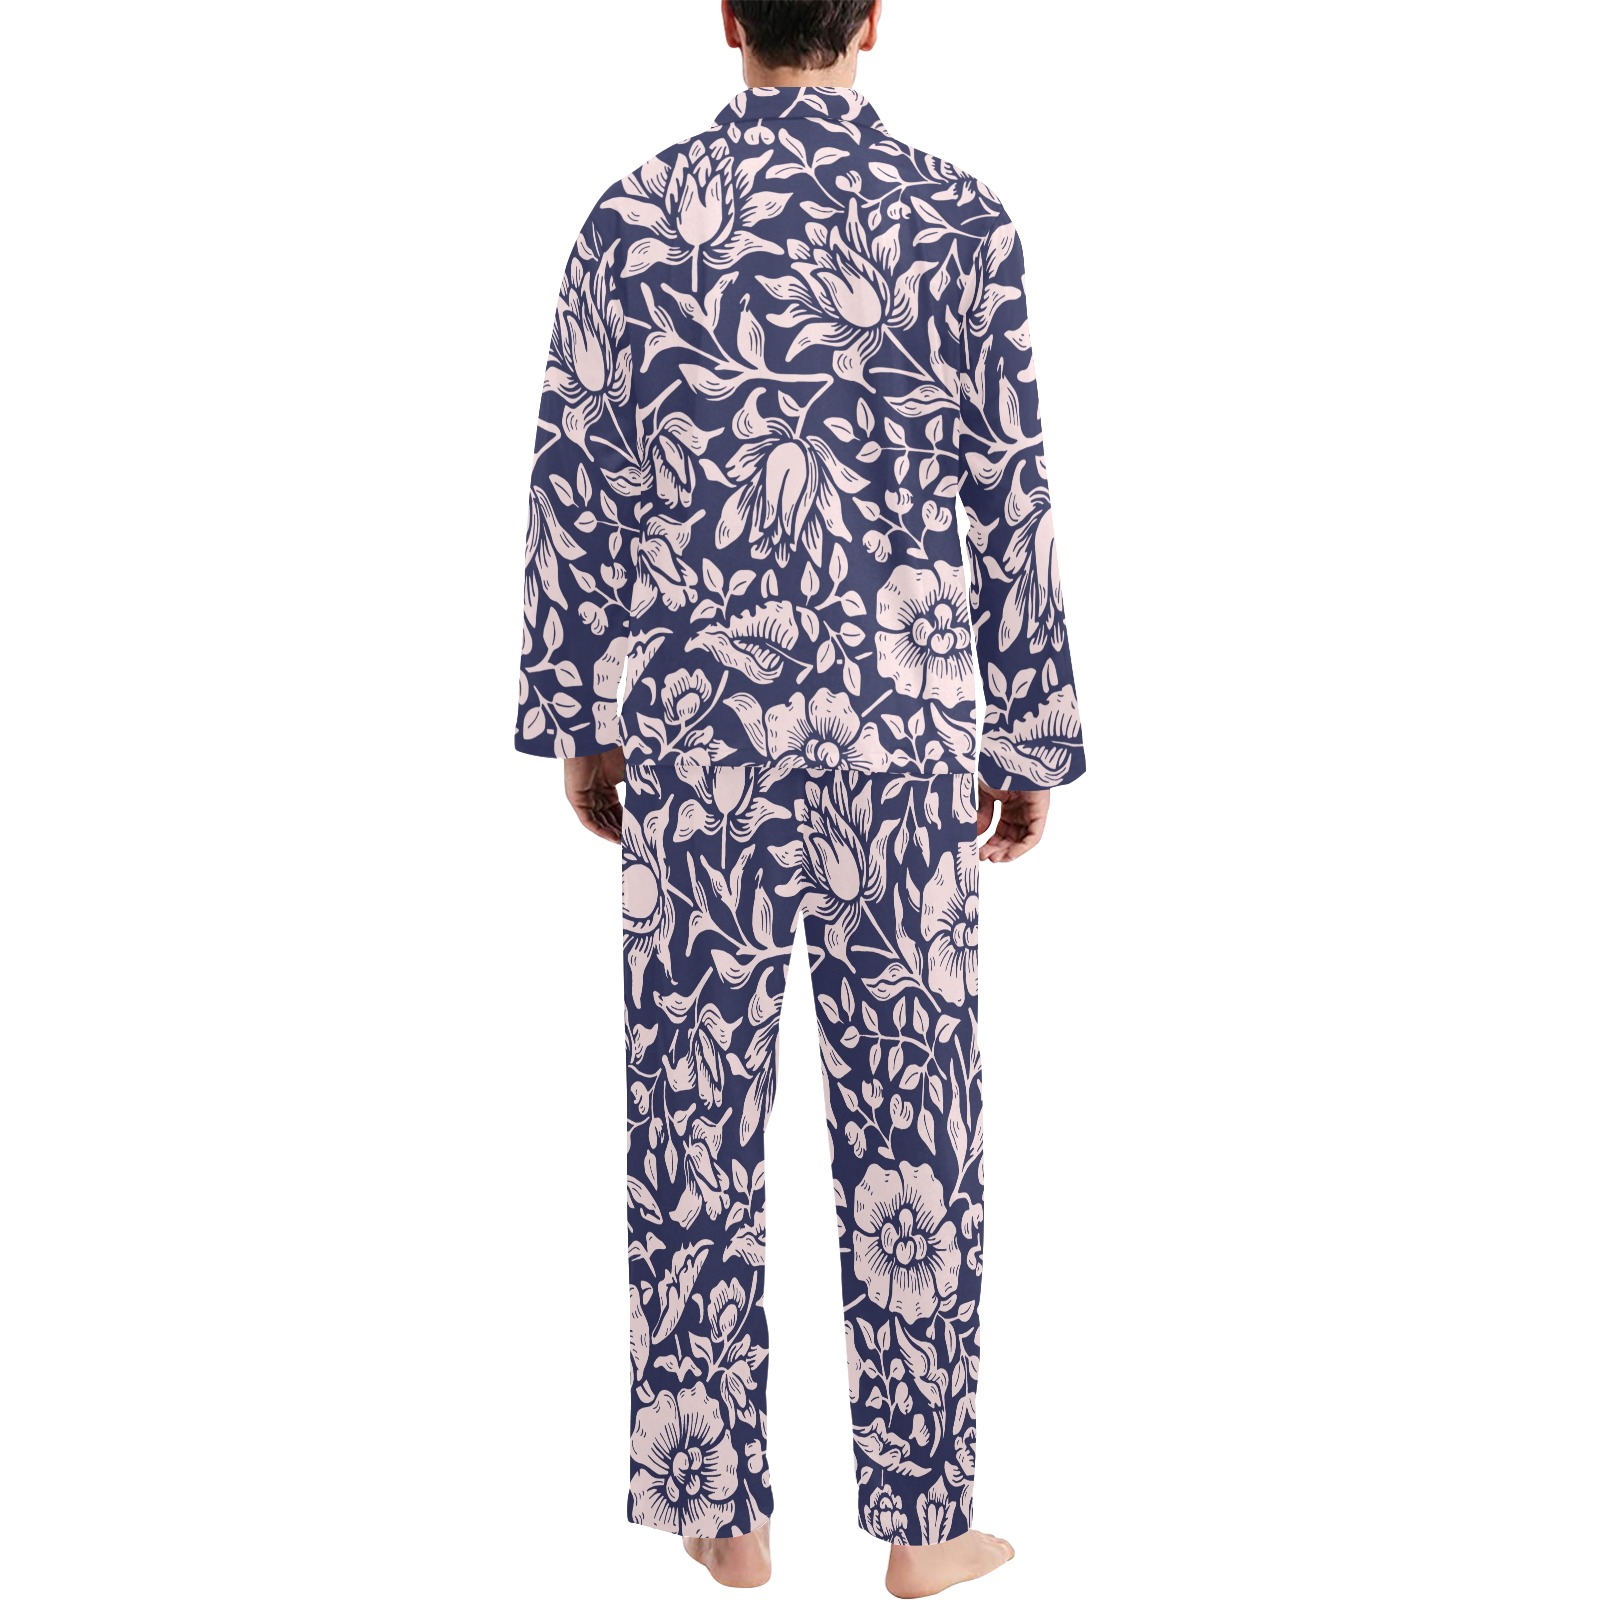 Pajama Men's V-Neck Long Pajama Set